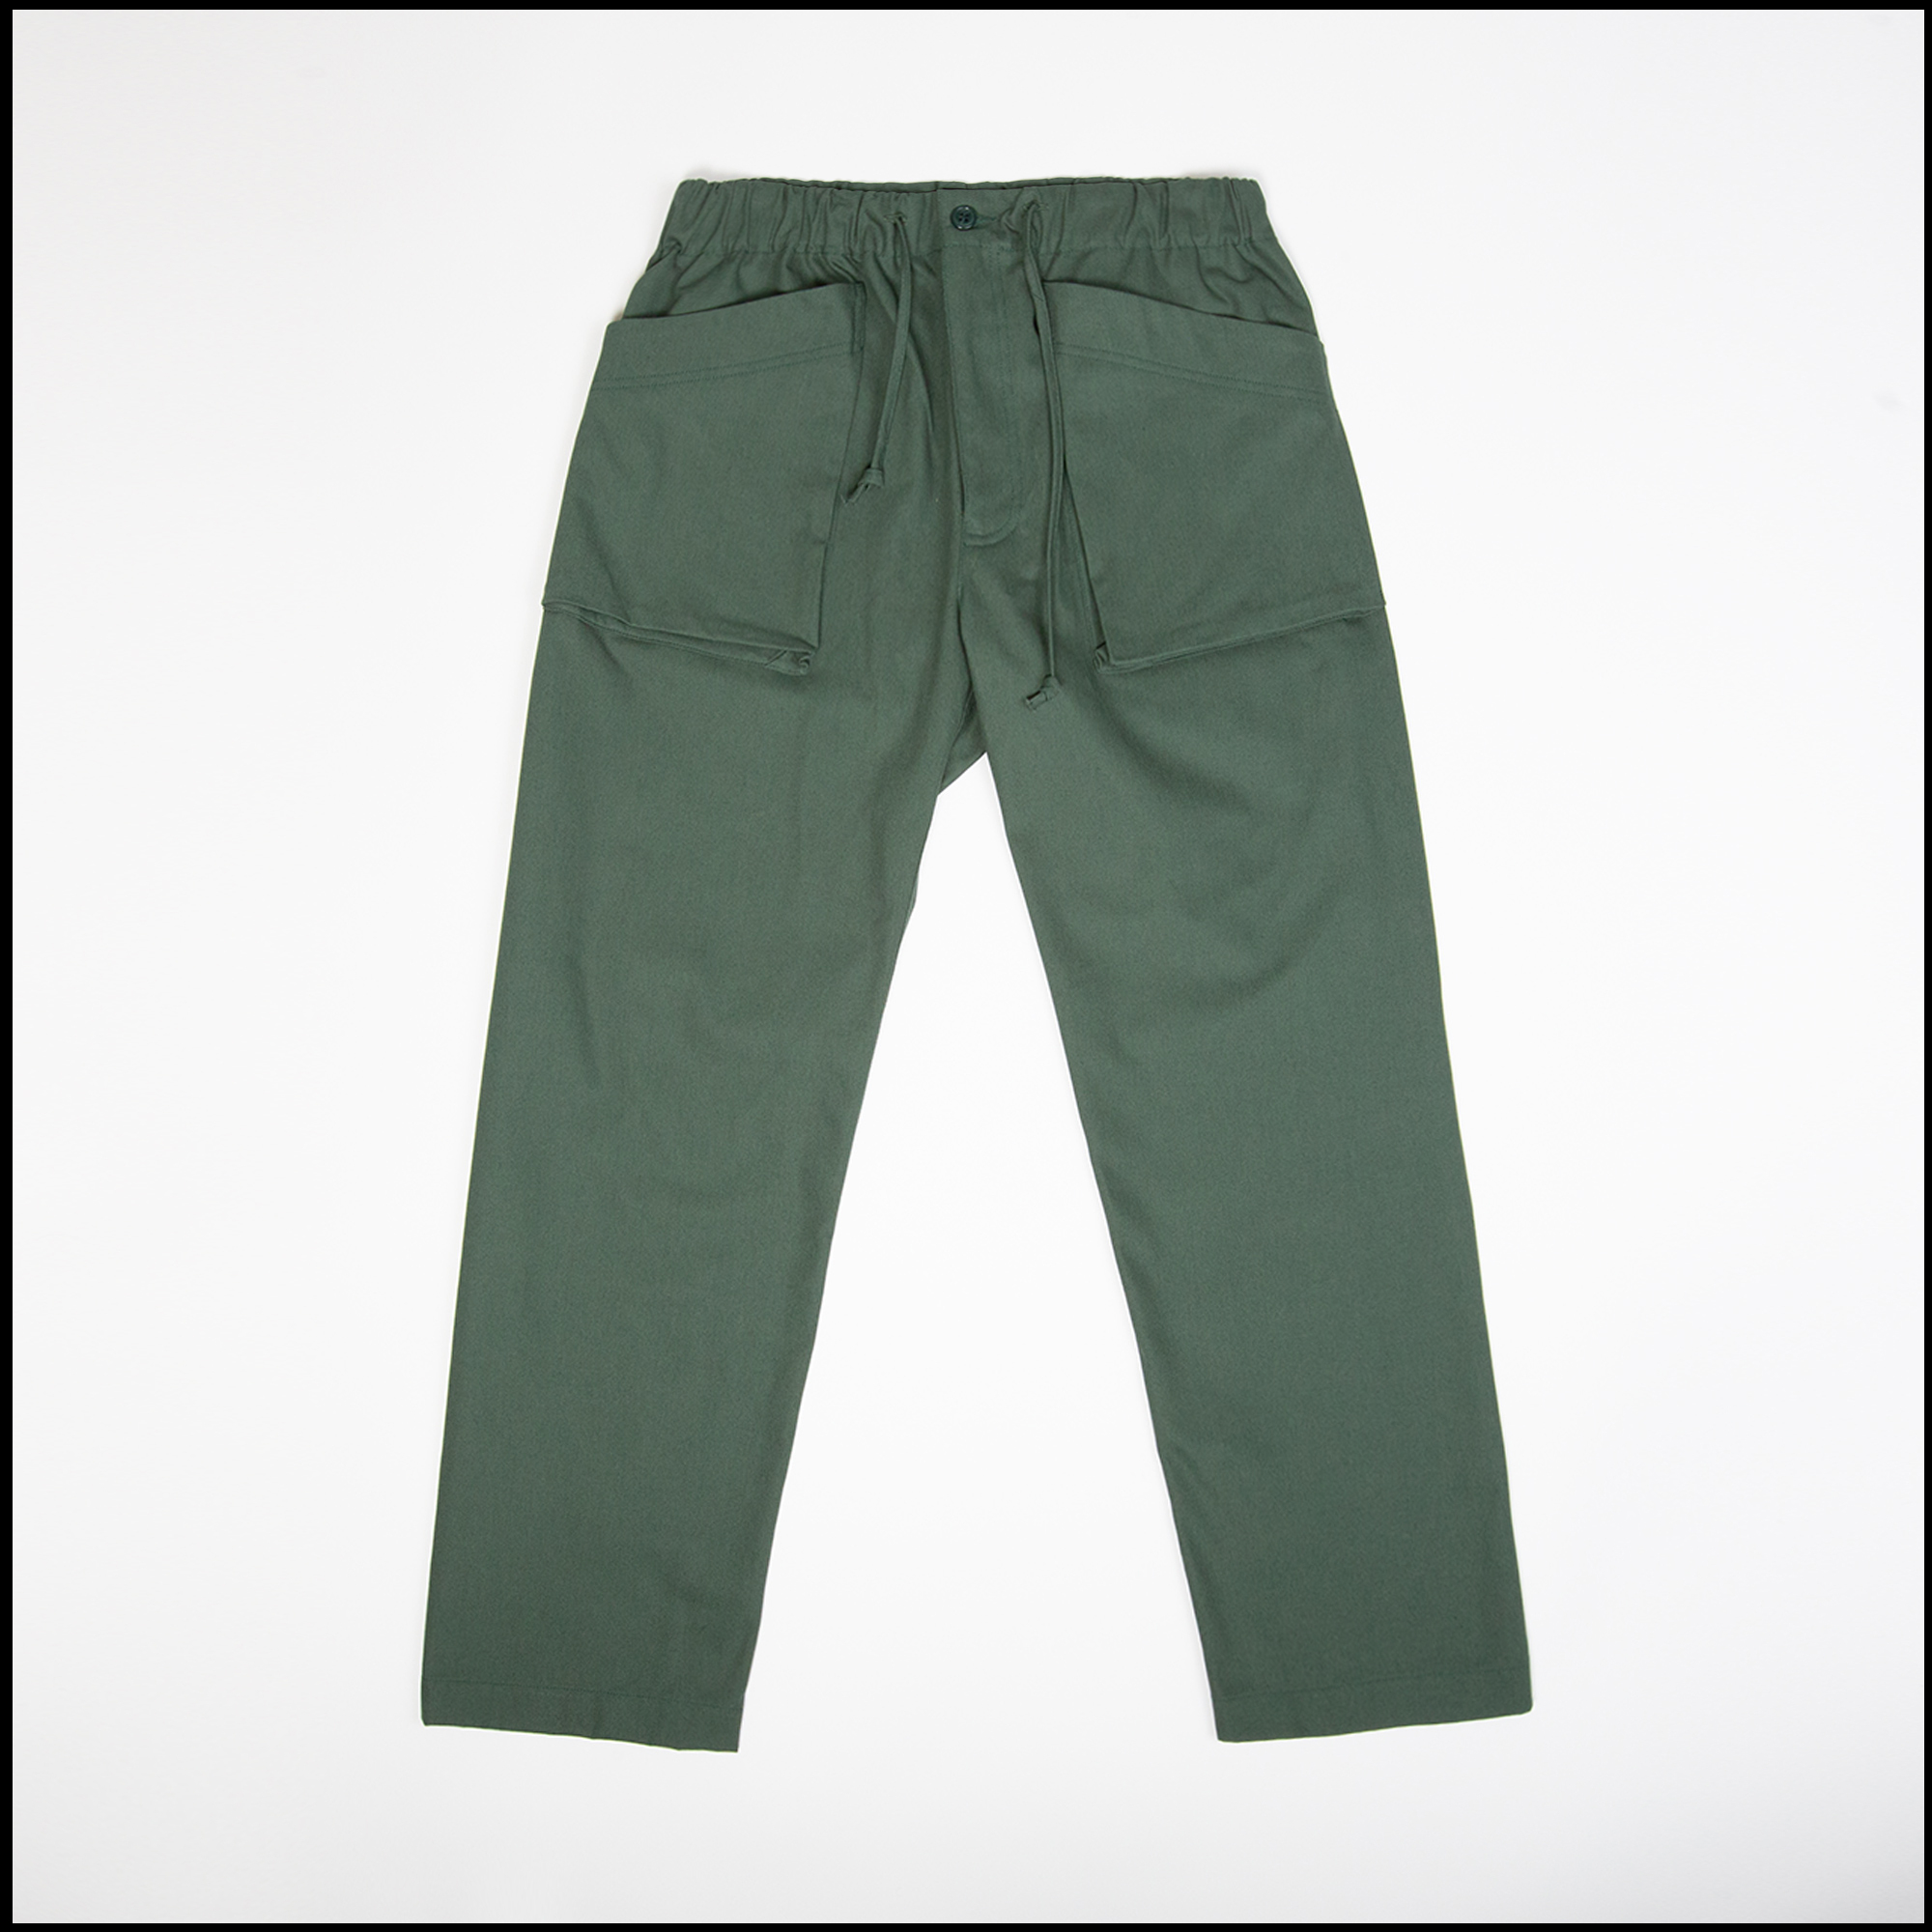 CARGO Pants in Emerald color by Arpenteur